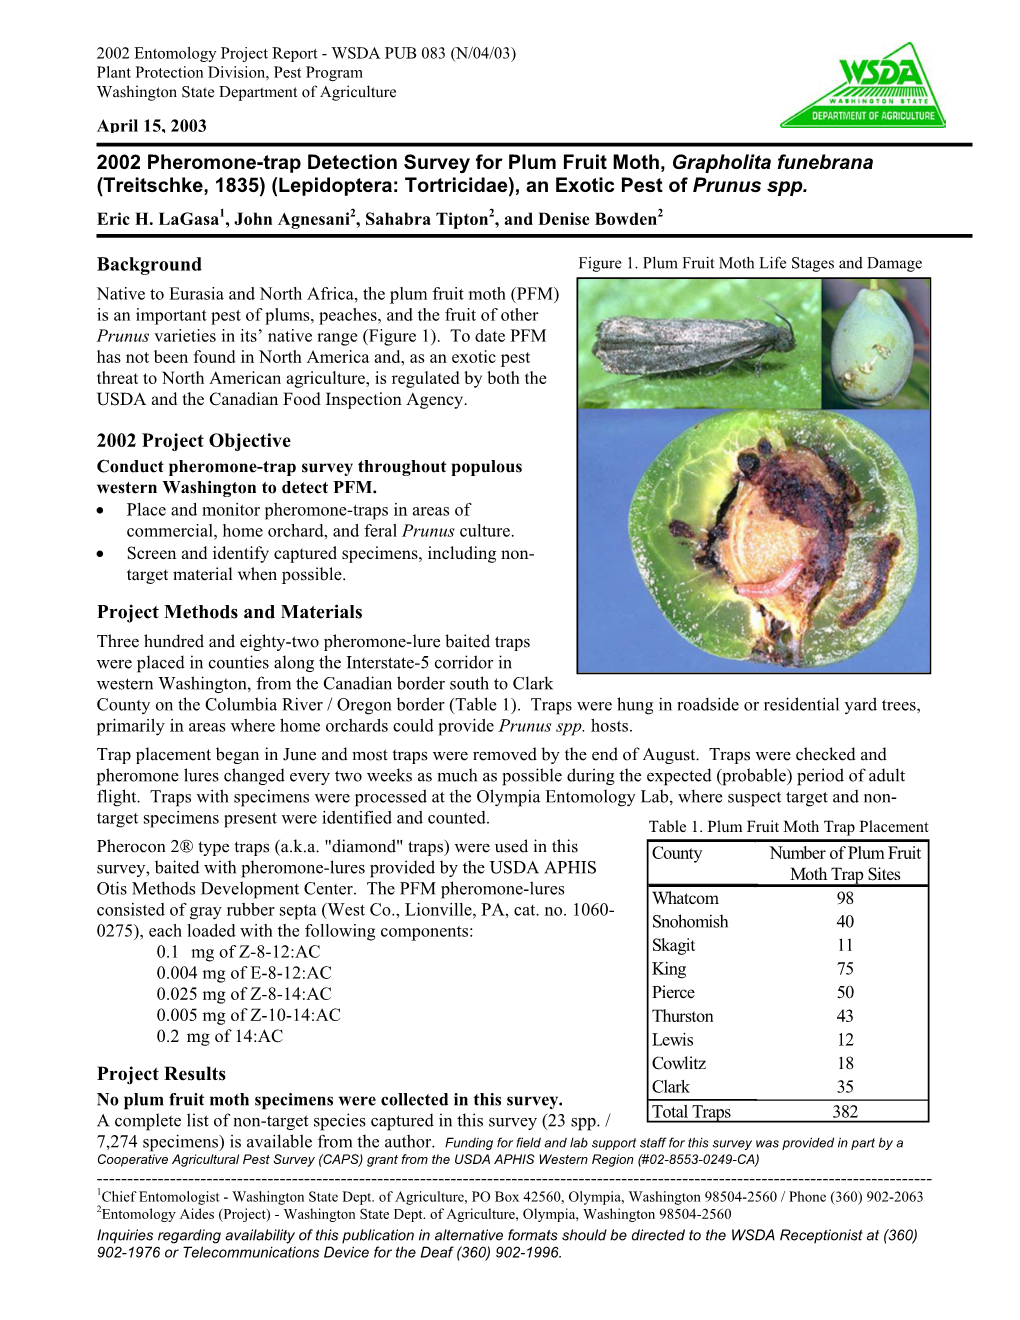 2002 Pheromone-Trap Detection Survey for Plum Fruit Moth, Grapholita Funebrana (Treitschke, 1835) (Lepidoptera: Tortricidae), an Exotic Pest of Prunus Spp